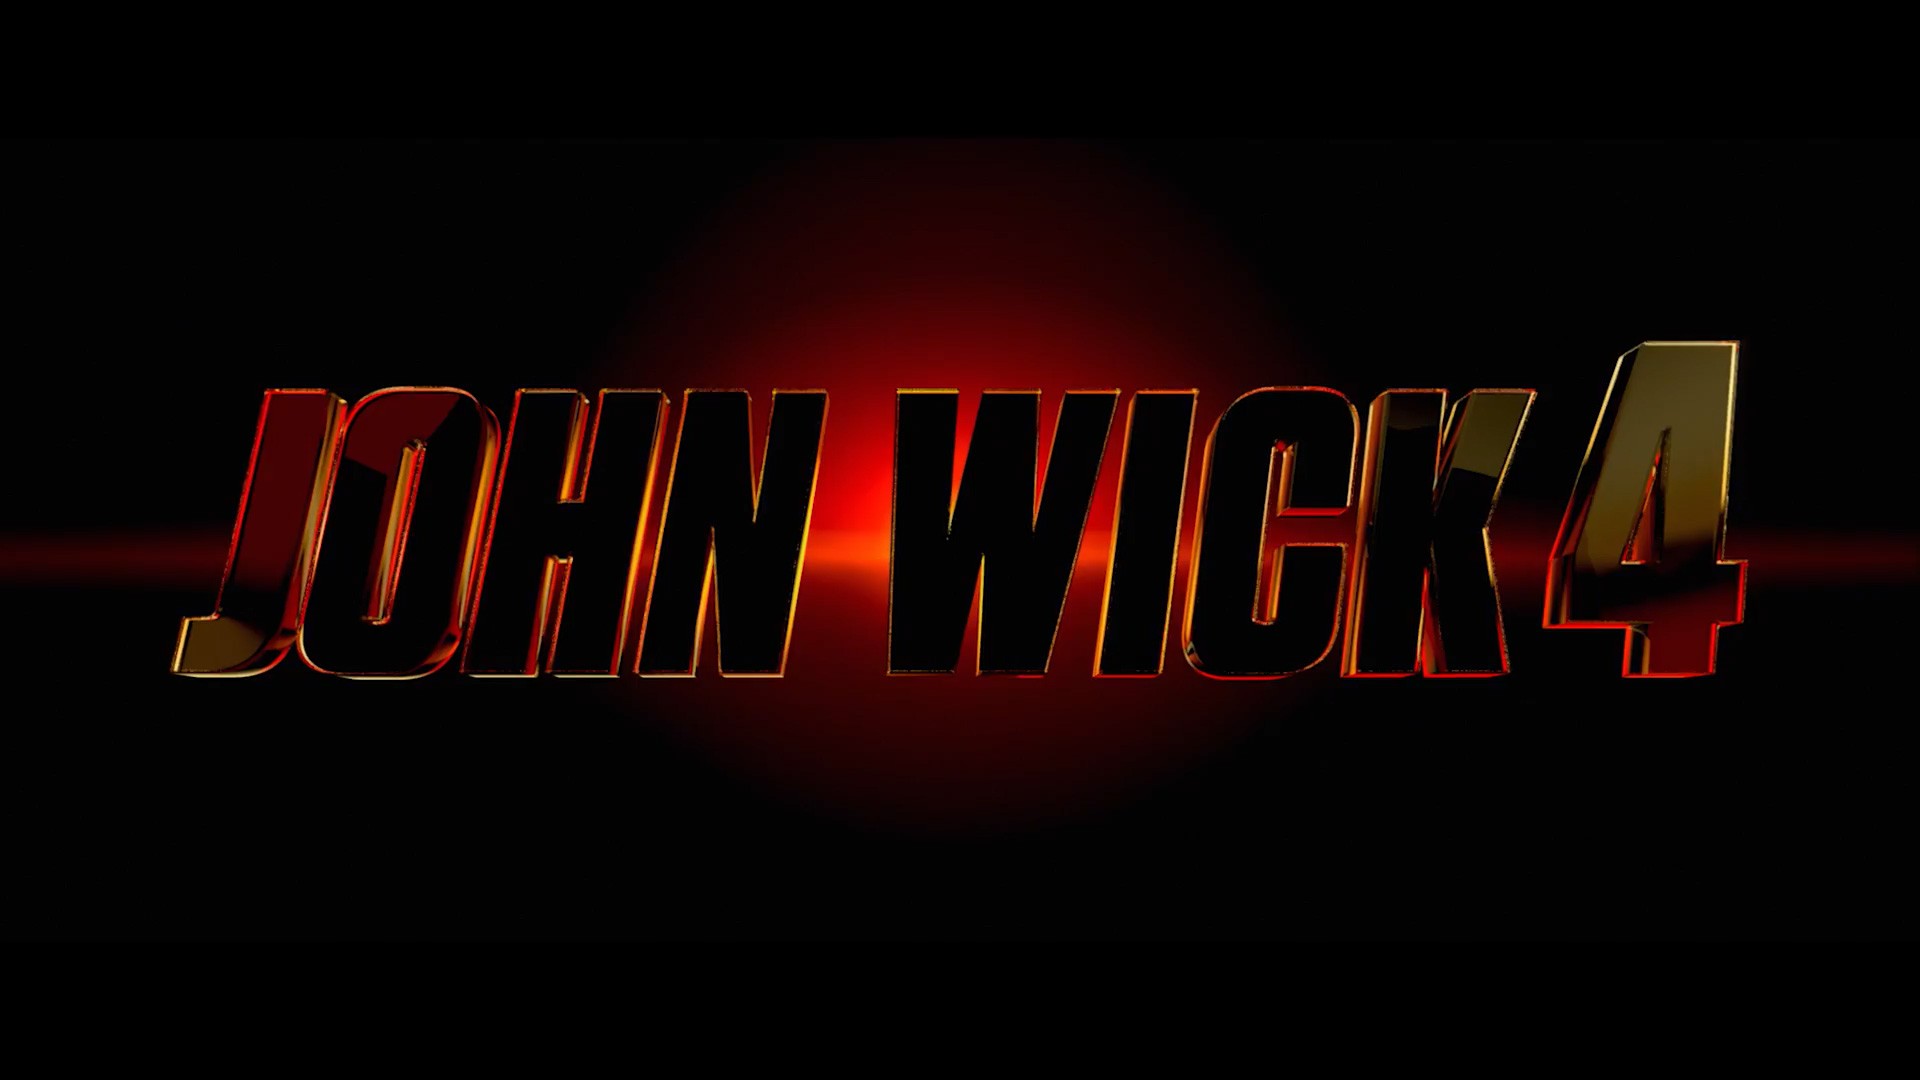 John Wick 4